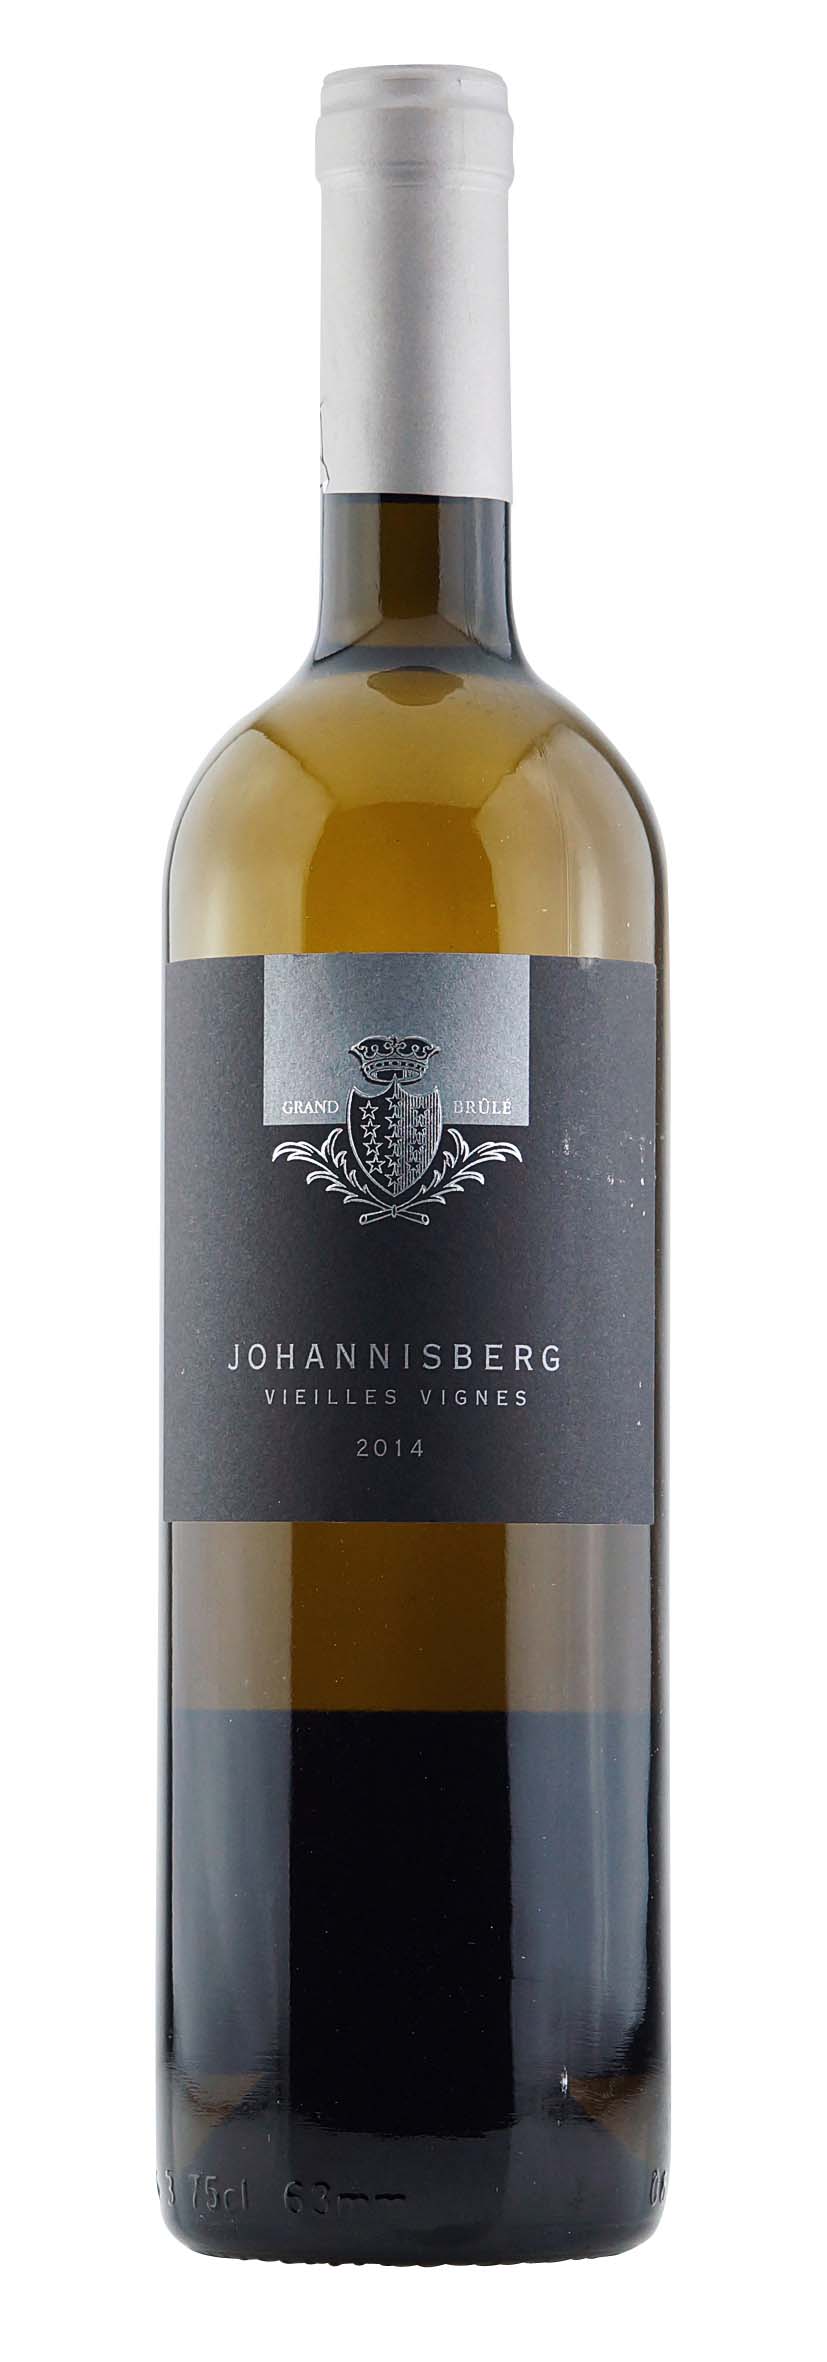 Valais AOC Johannisberg Vieilles Vignes 2014